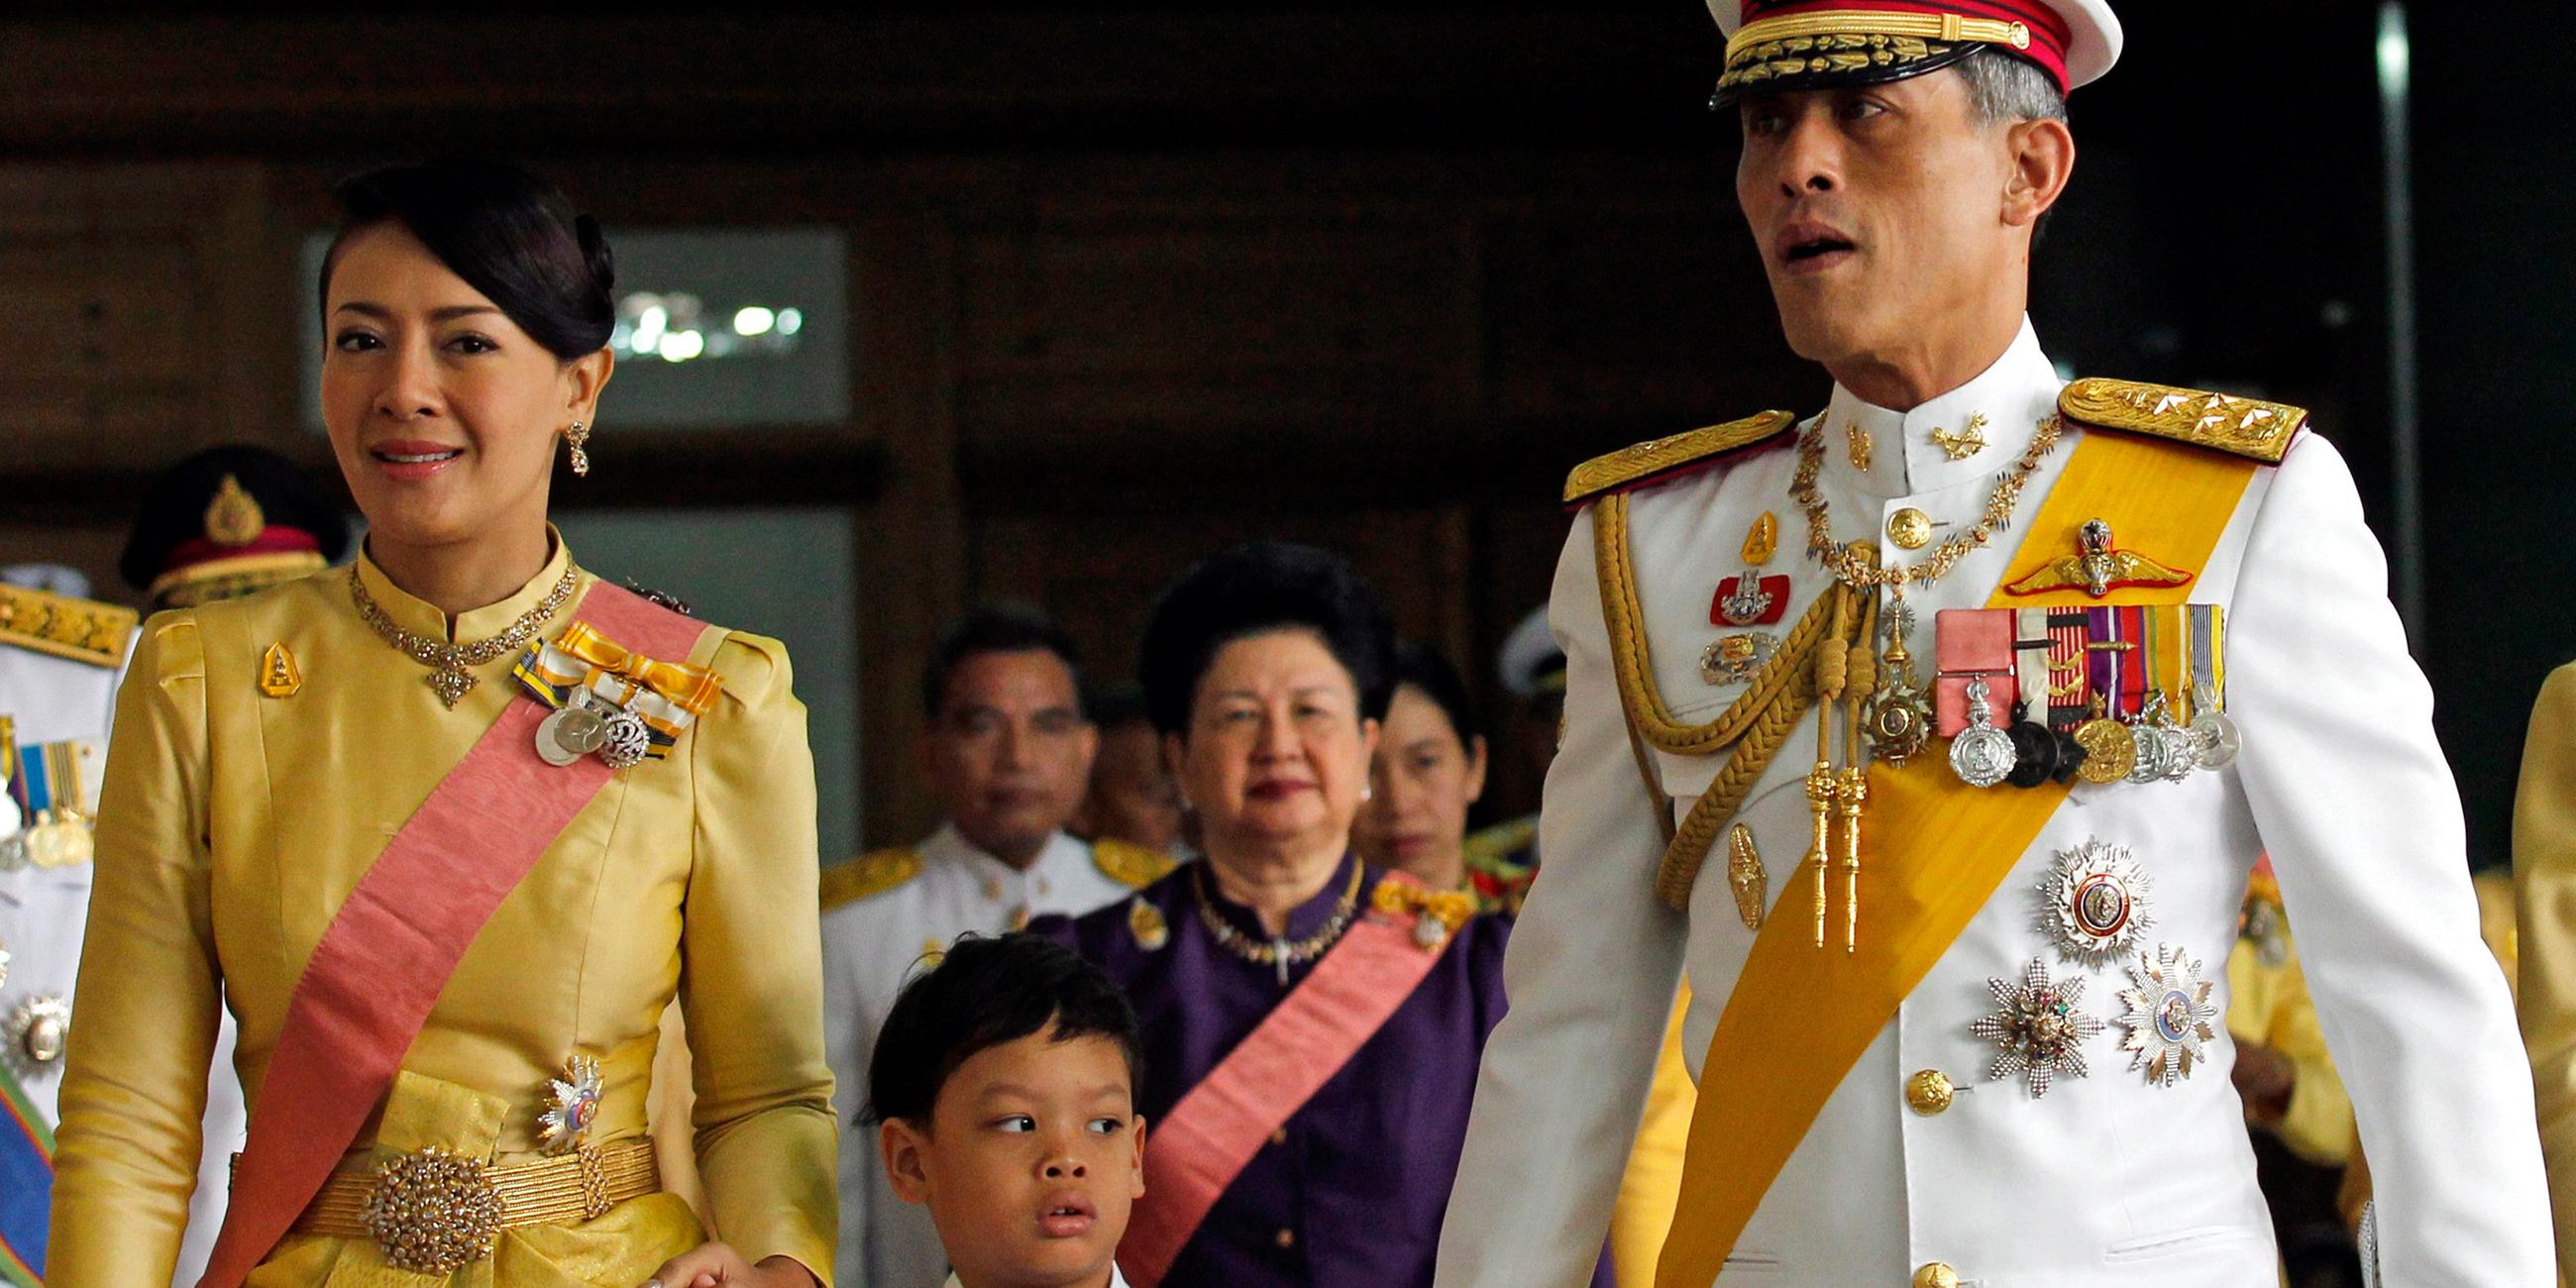 Thailand - Kronprinz Maha Vajiralongkorn seine damalige Frau Prinzessin Srirasmi und Sohn